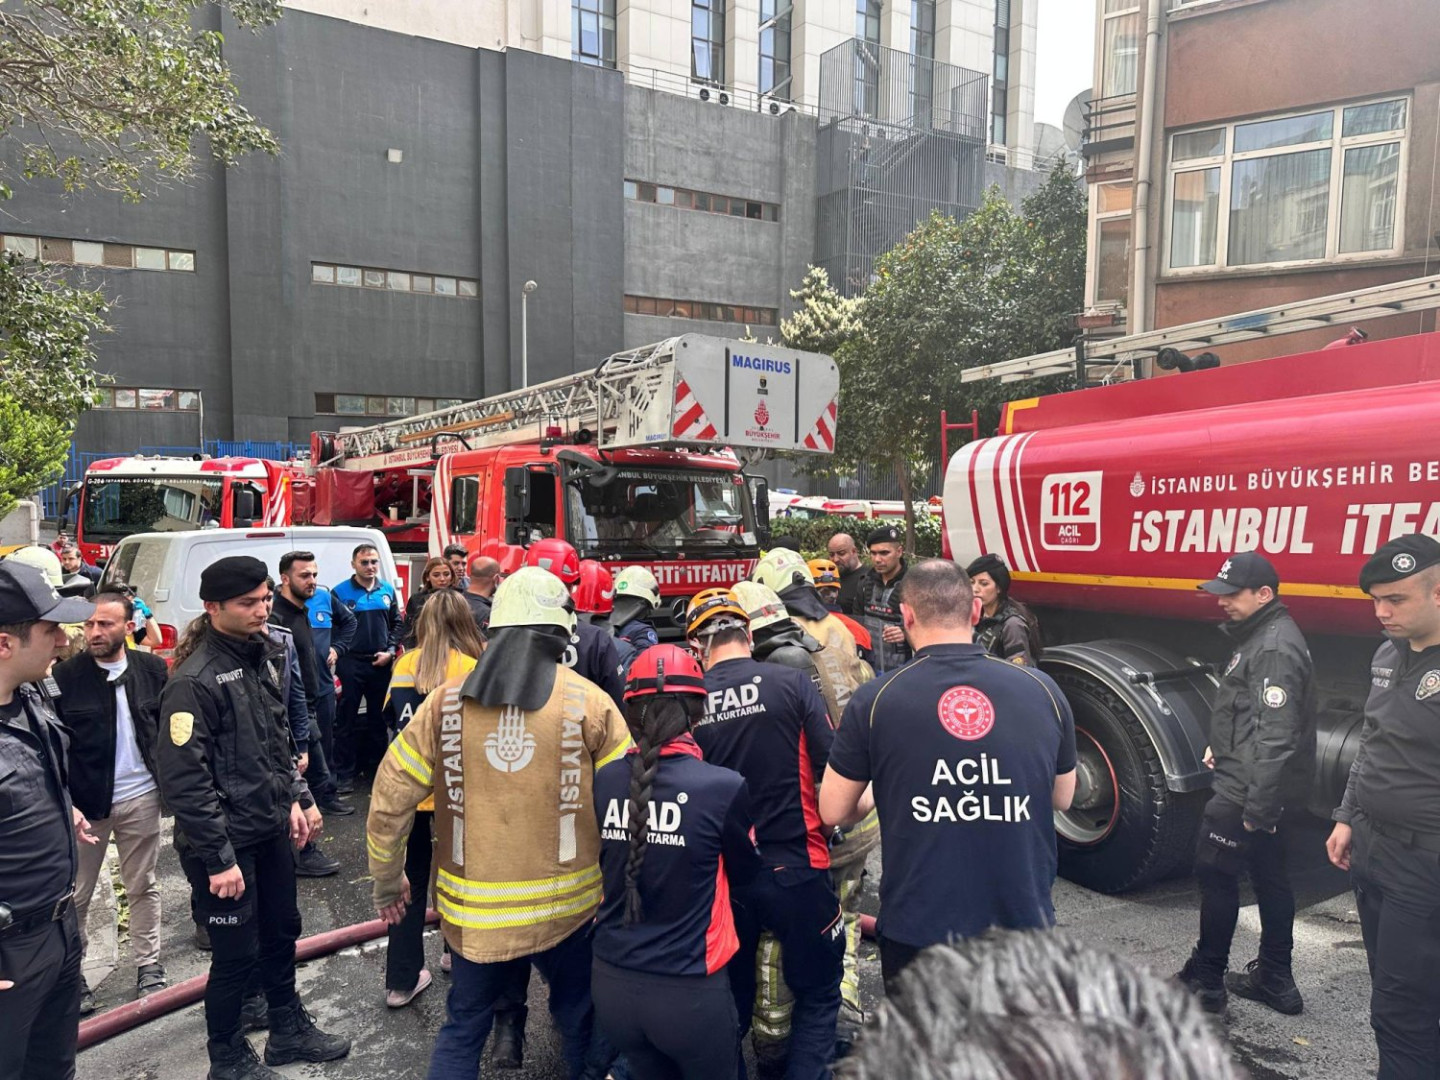 Tragic death of 25 people in massive fire in Istanbul, Turkiye